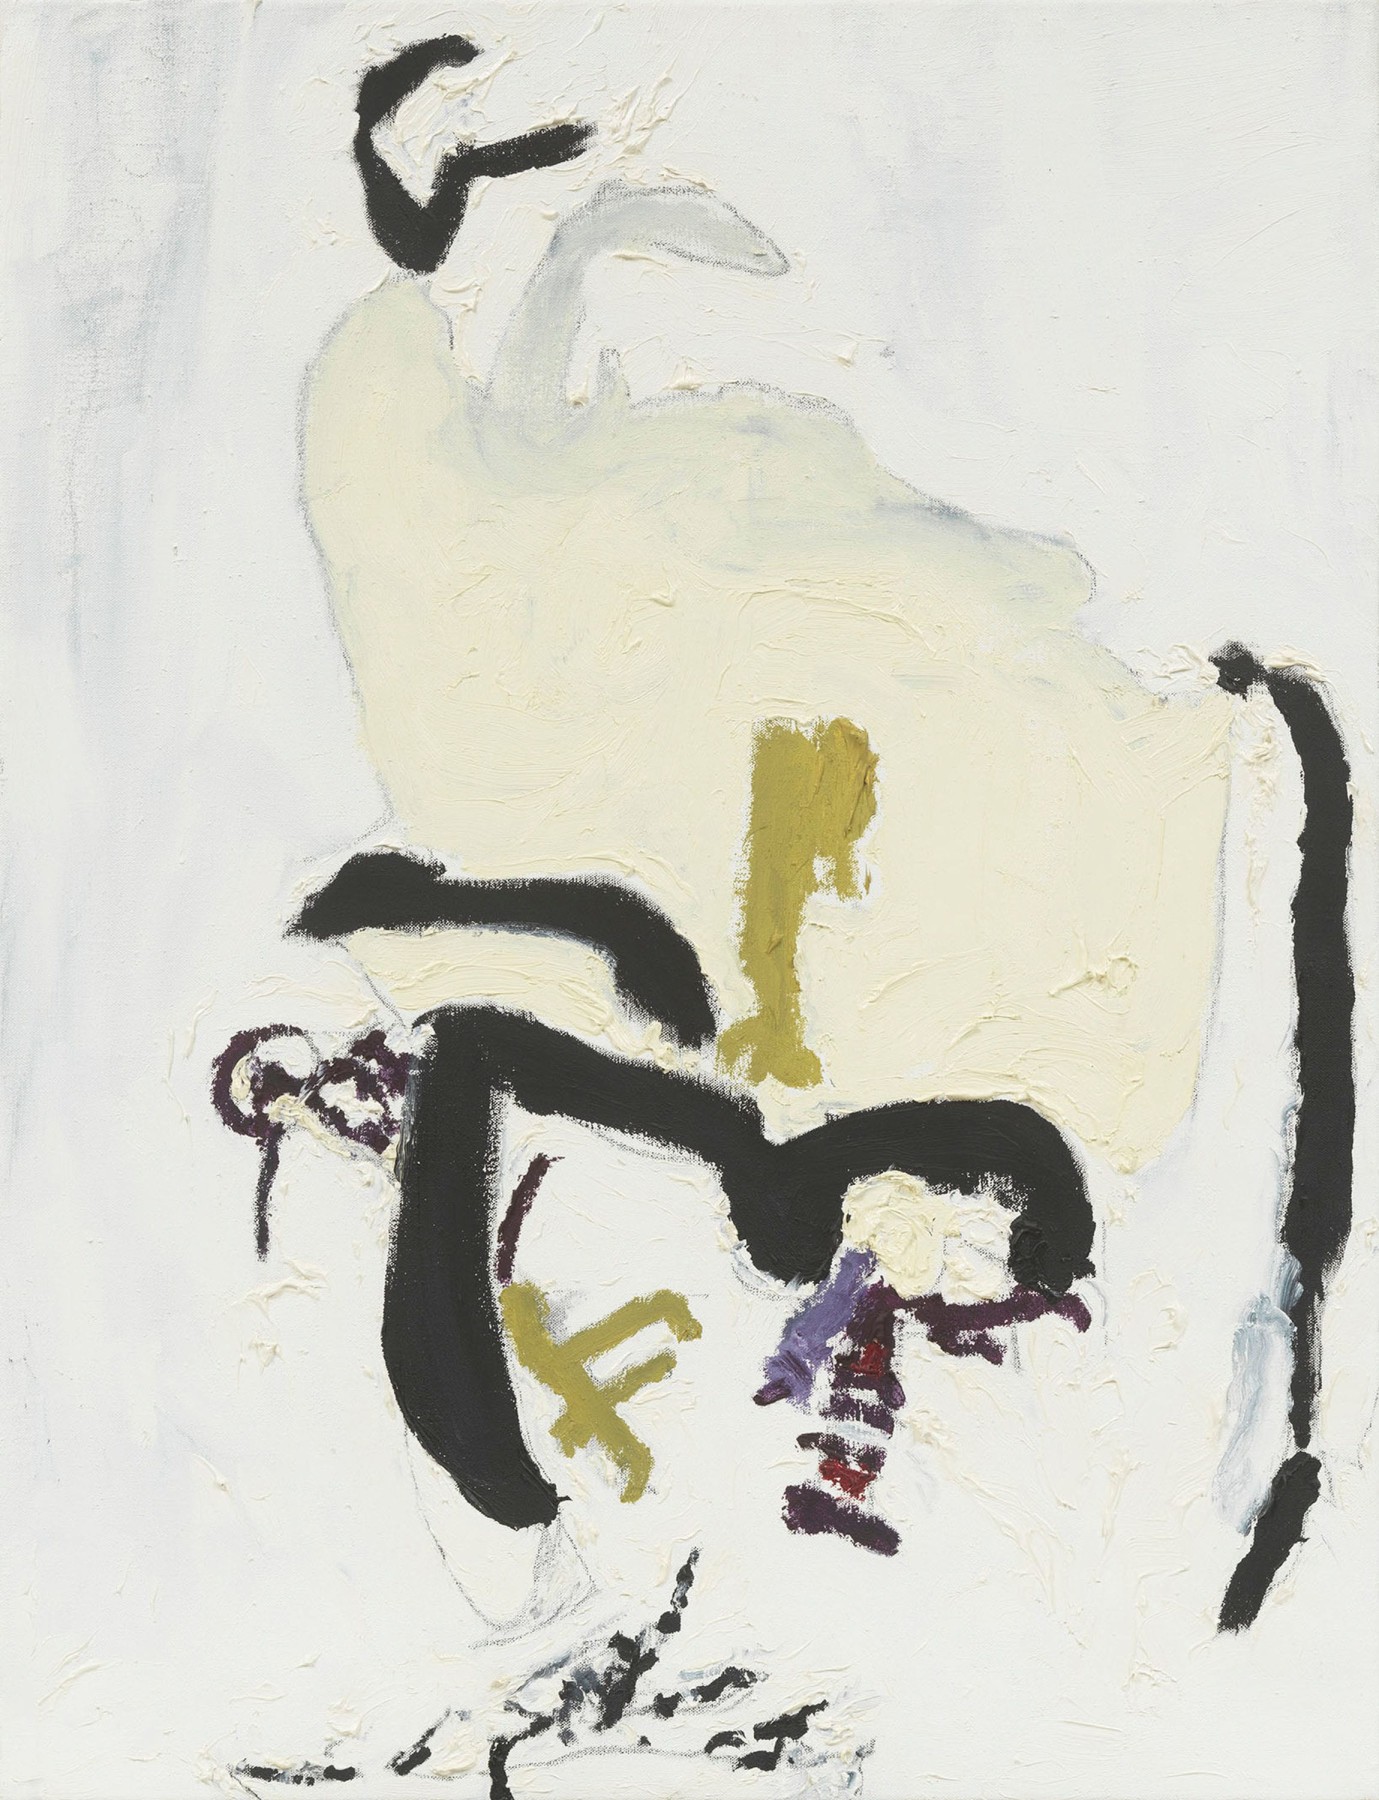 Don Van Vliet

&amp;ldquo;Boneless Spirit&amp;rdquo;, 1990

Oil on canvas

45 3/4 x 35 inches

116 x 89 cm

VLI 113